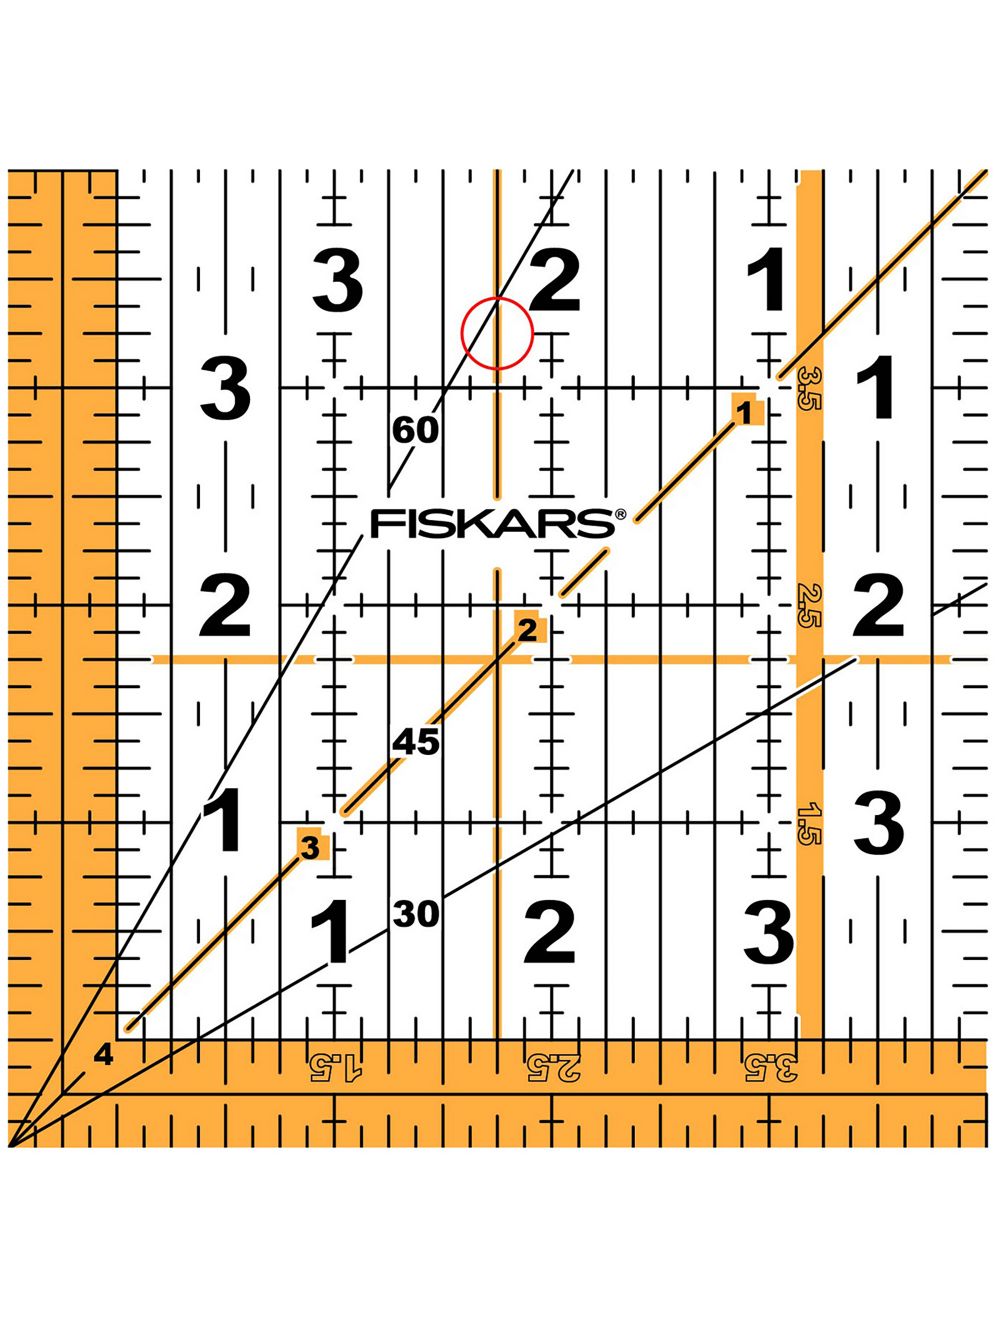 Fiskars Square Acrylic Ruler